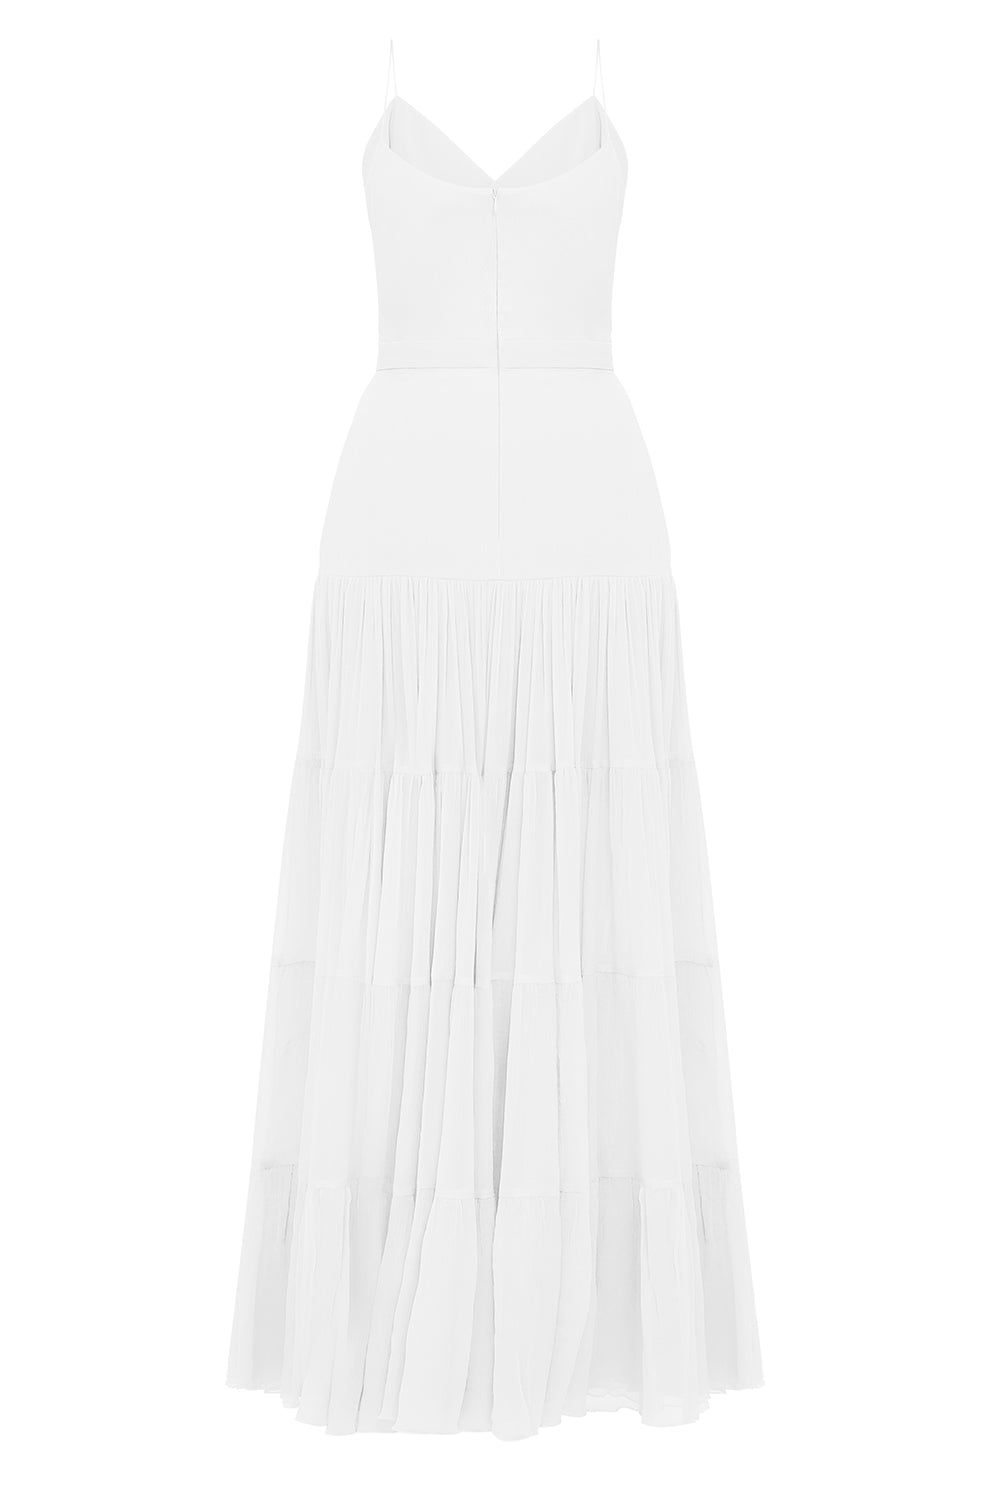 Mykonos Silk Maxi White Dress